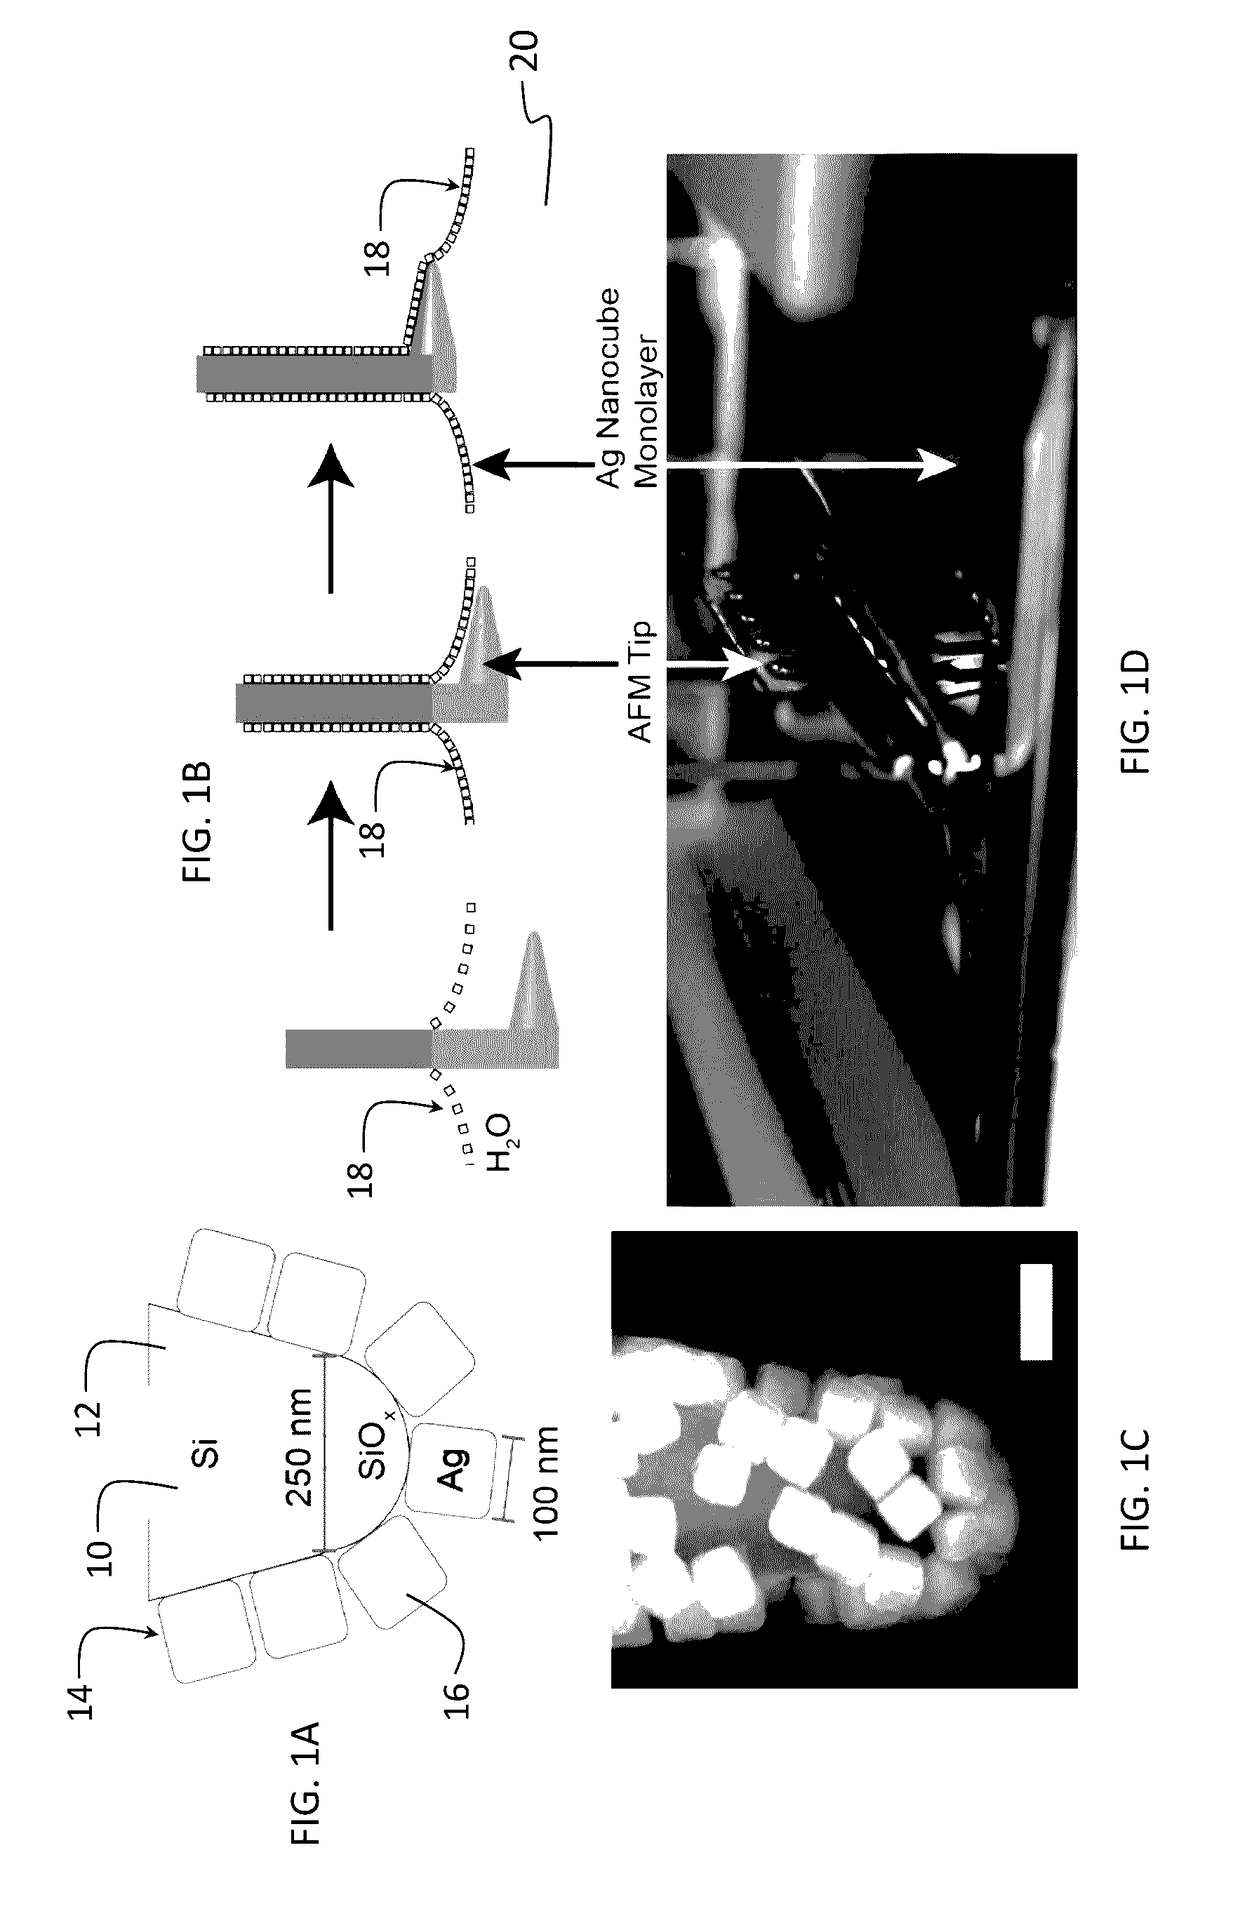 Nanoantenna scanning probe tip, and fabrication methods